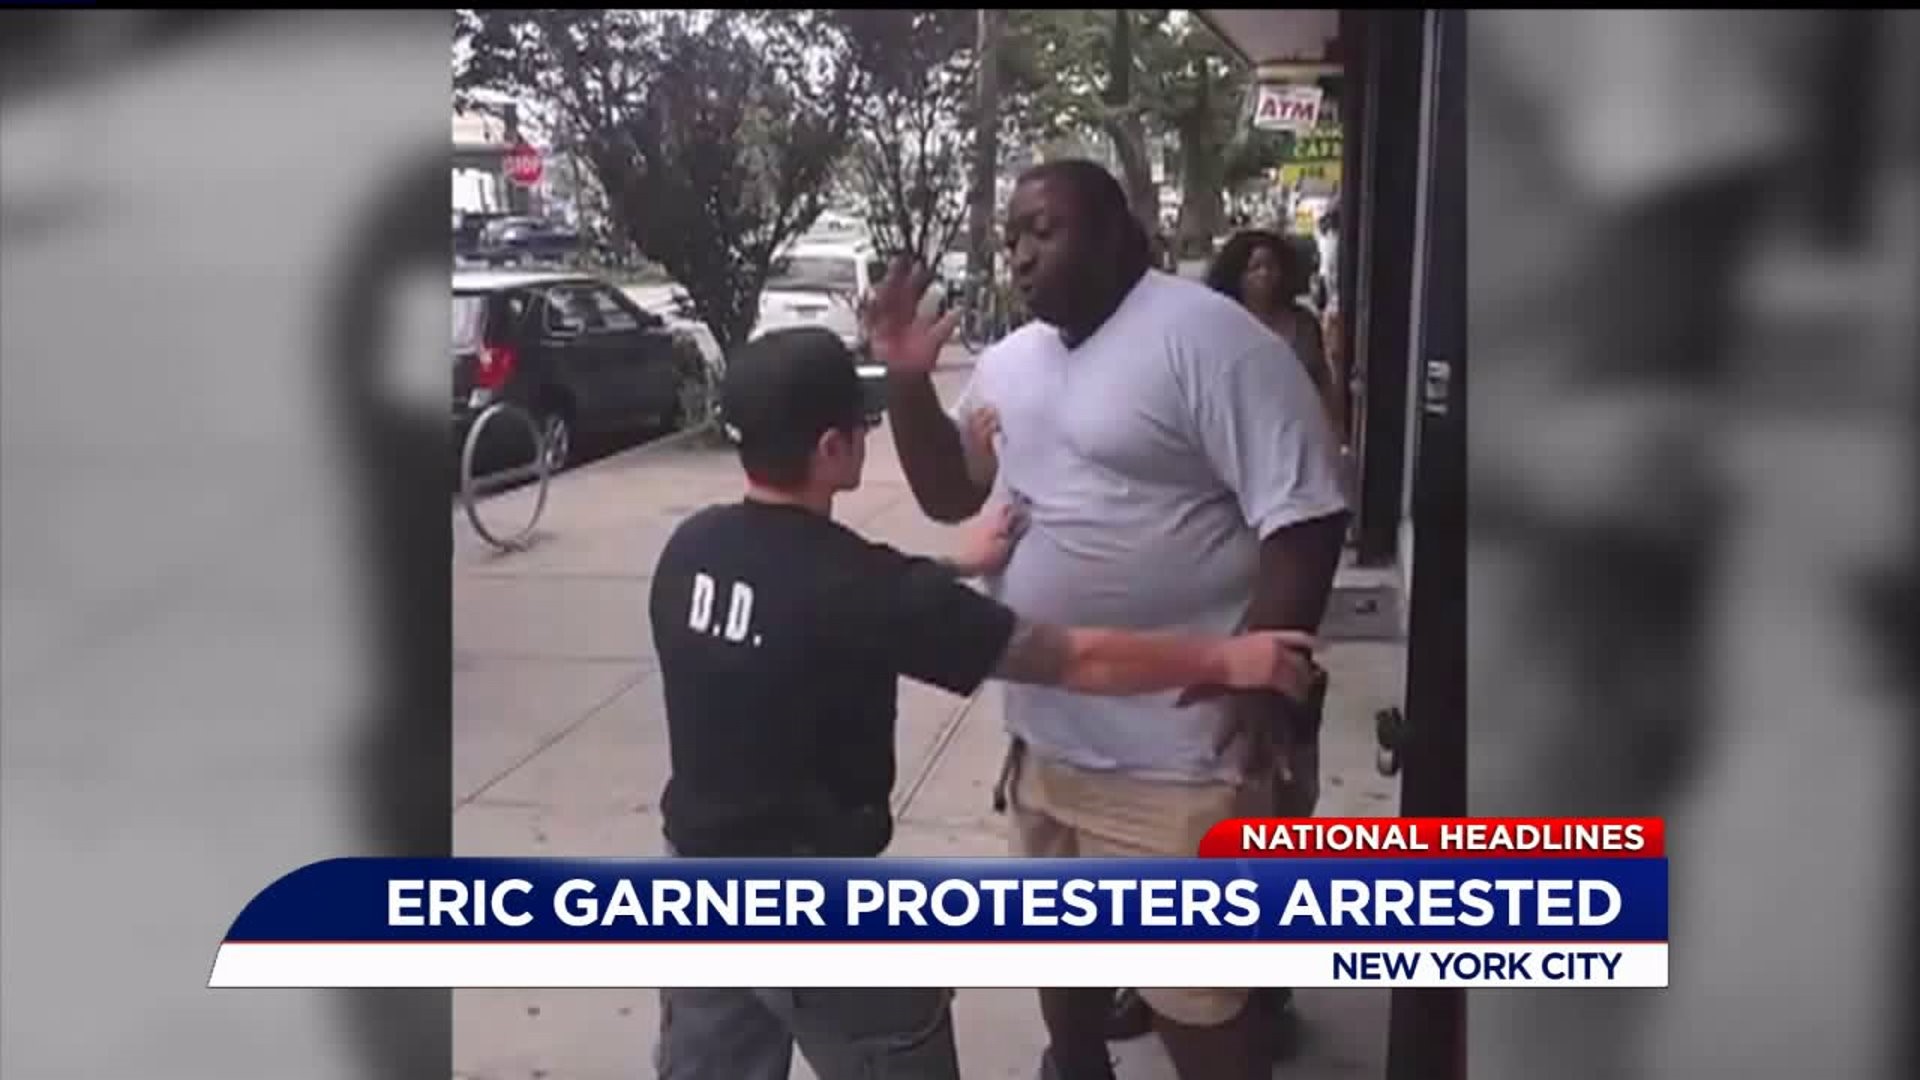 Eric Garner protests in New York